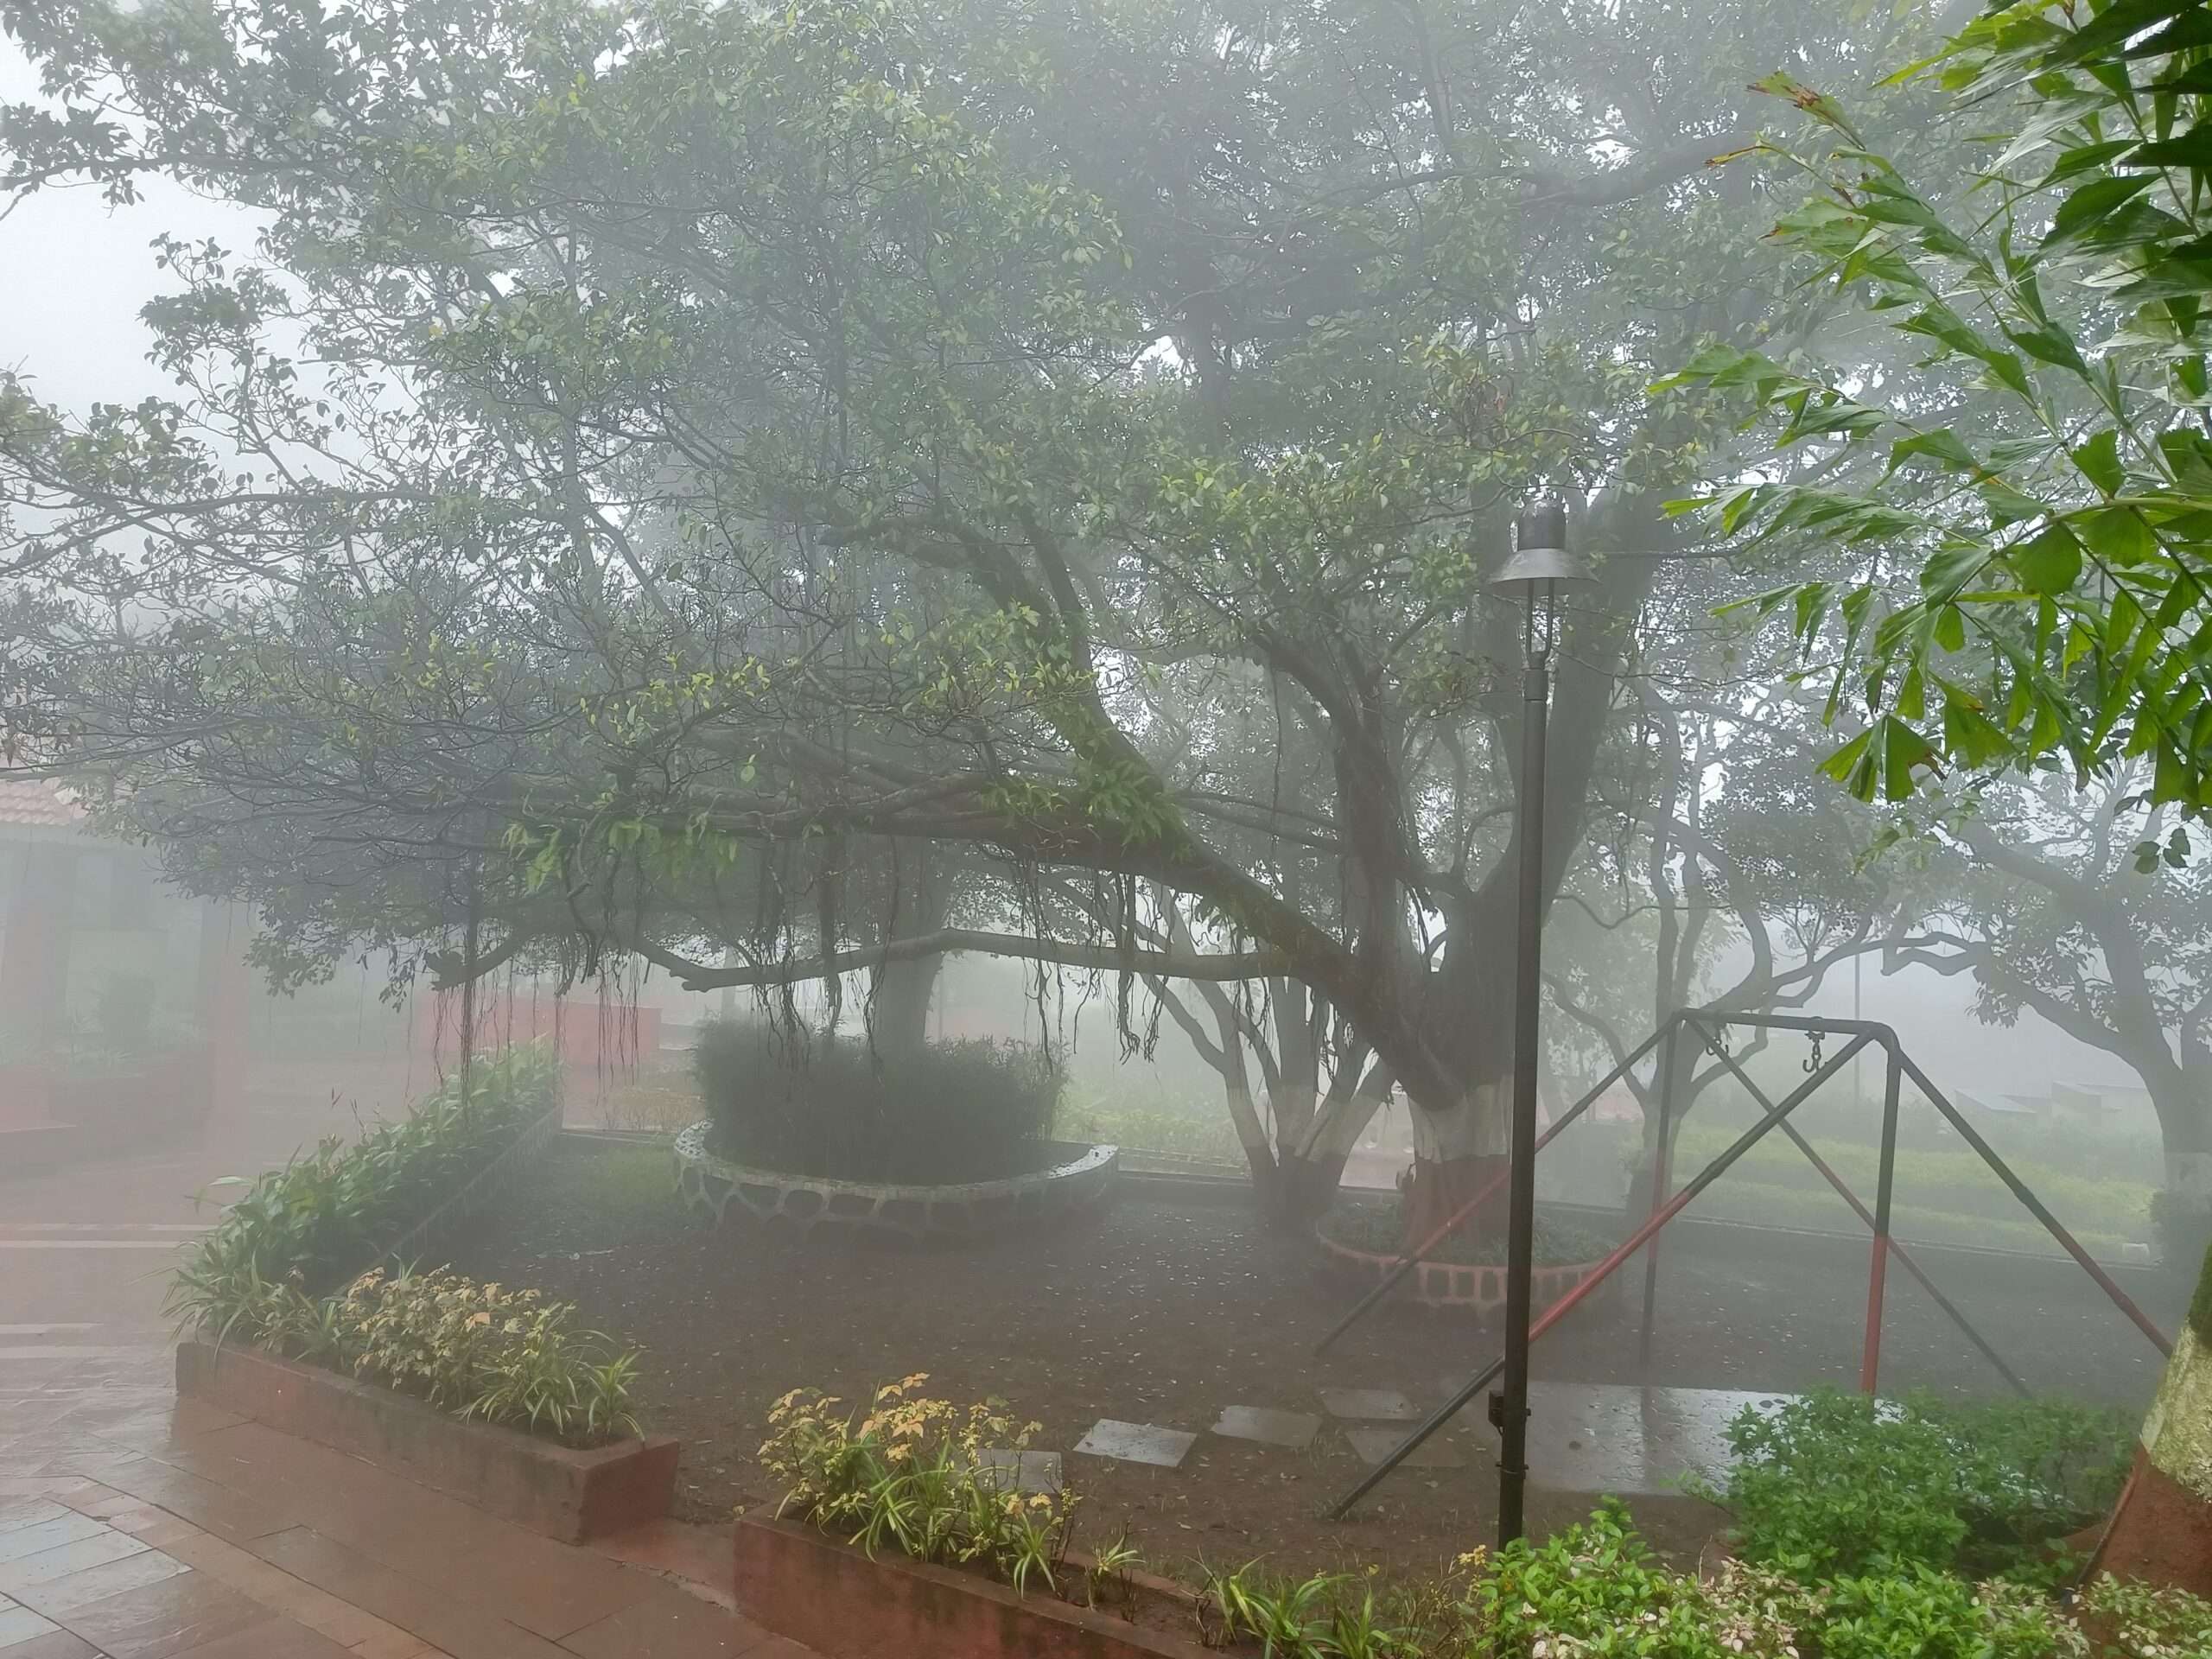 Monsoon climate at Matheran